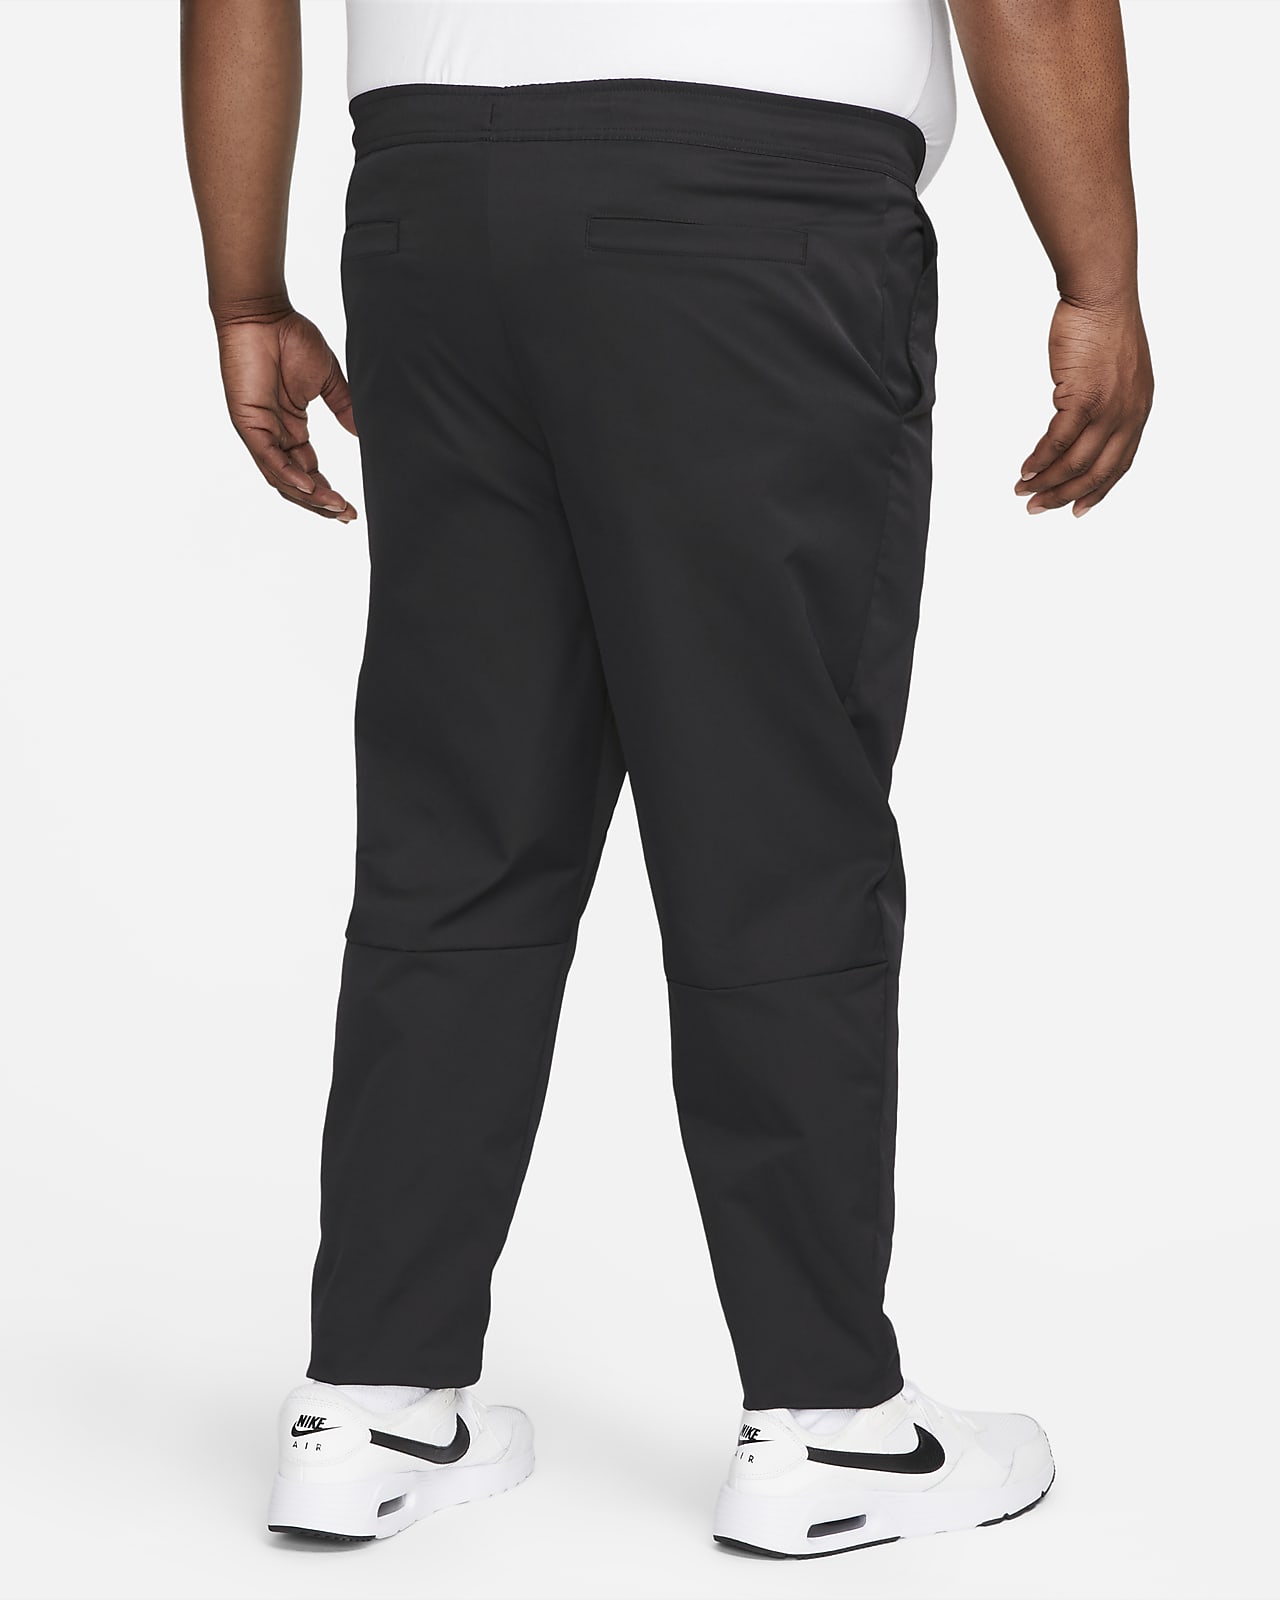 Used Good Condition Nike Men's Flex Core Pants Khaki Size 38 32 |  SidelineSwap